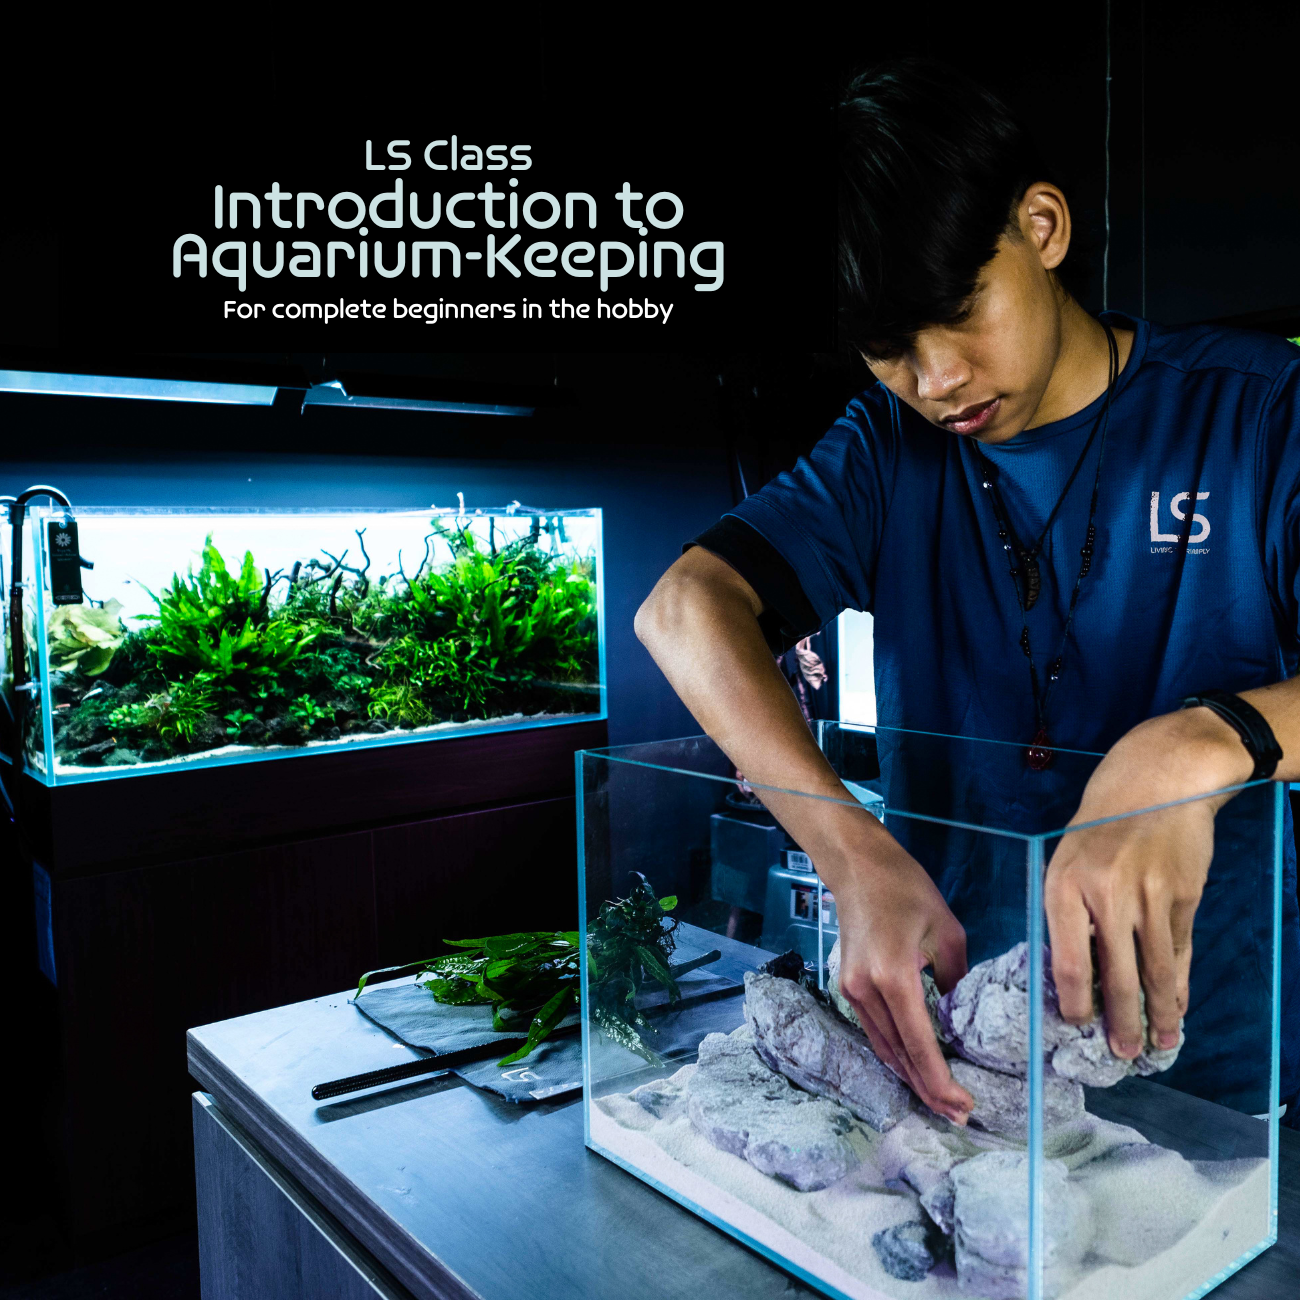 LS Class: Introduction to Aquarium-Keeping